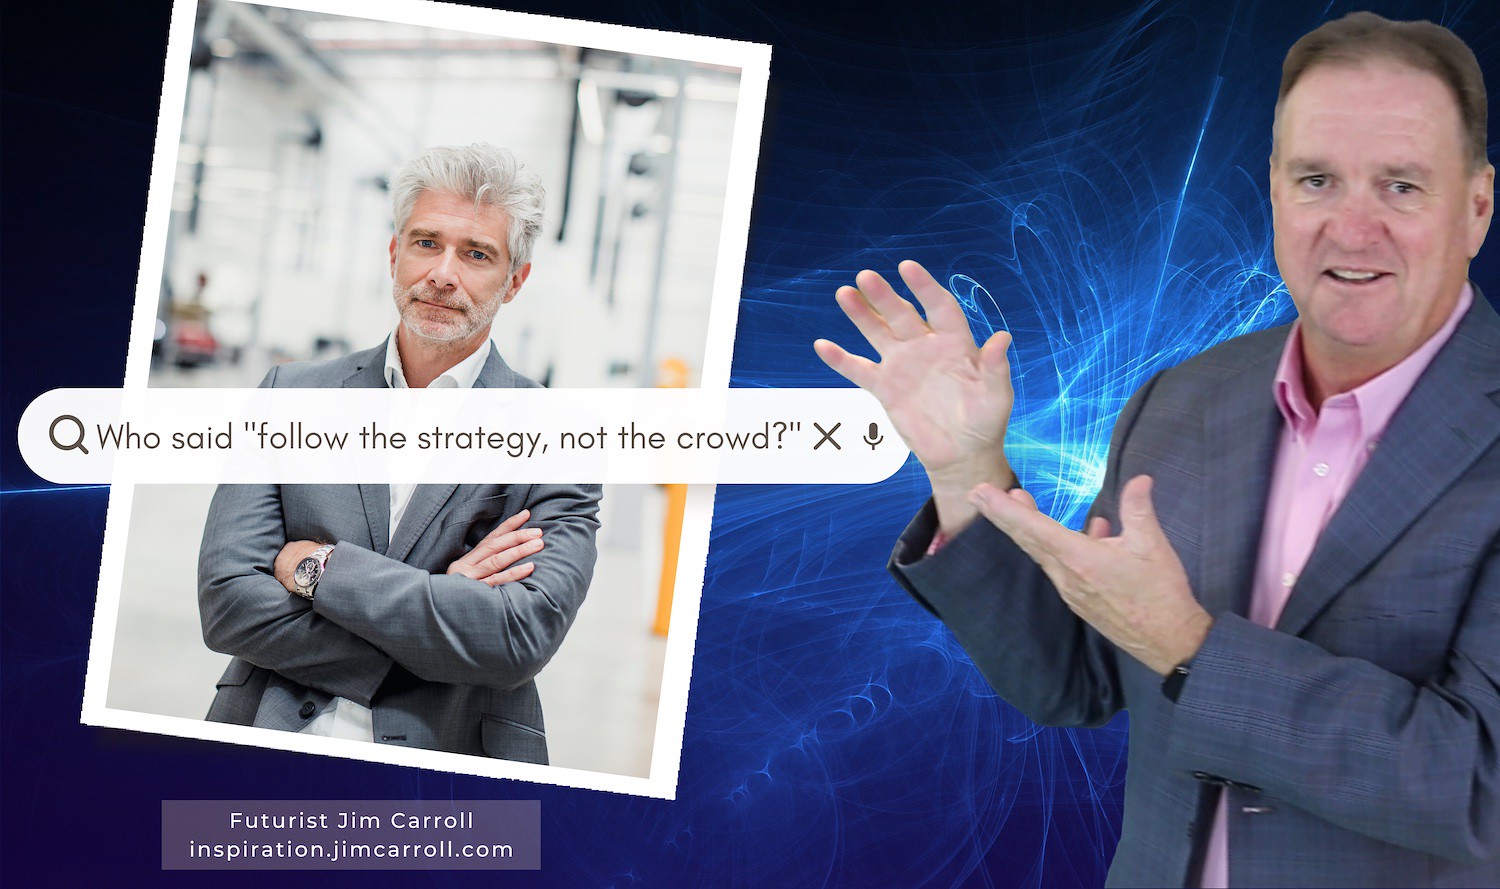 "Follow the strategy, not the crowd!" - Futurist Jim Carroll